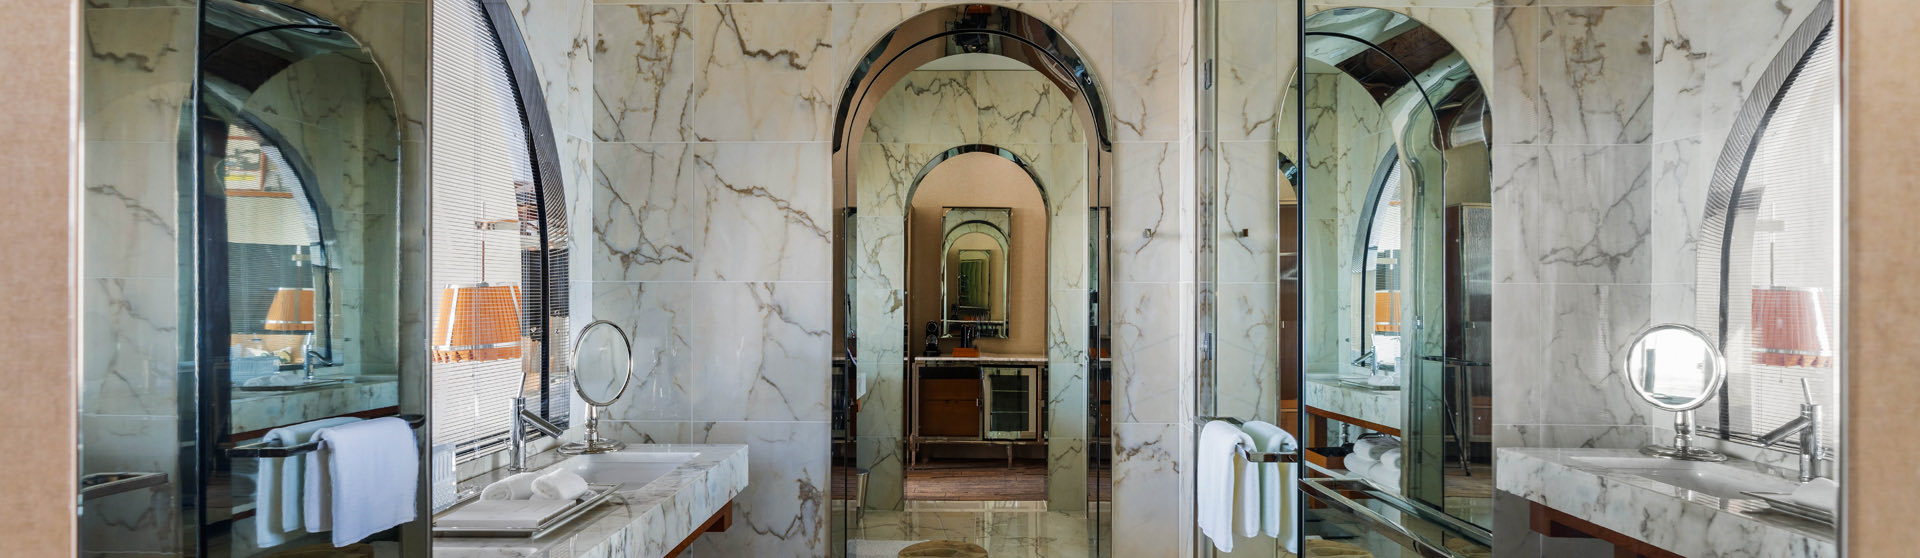 marbled bathroom with archways